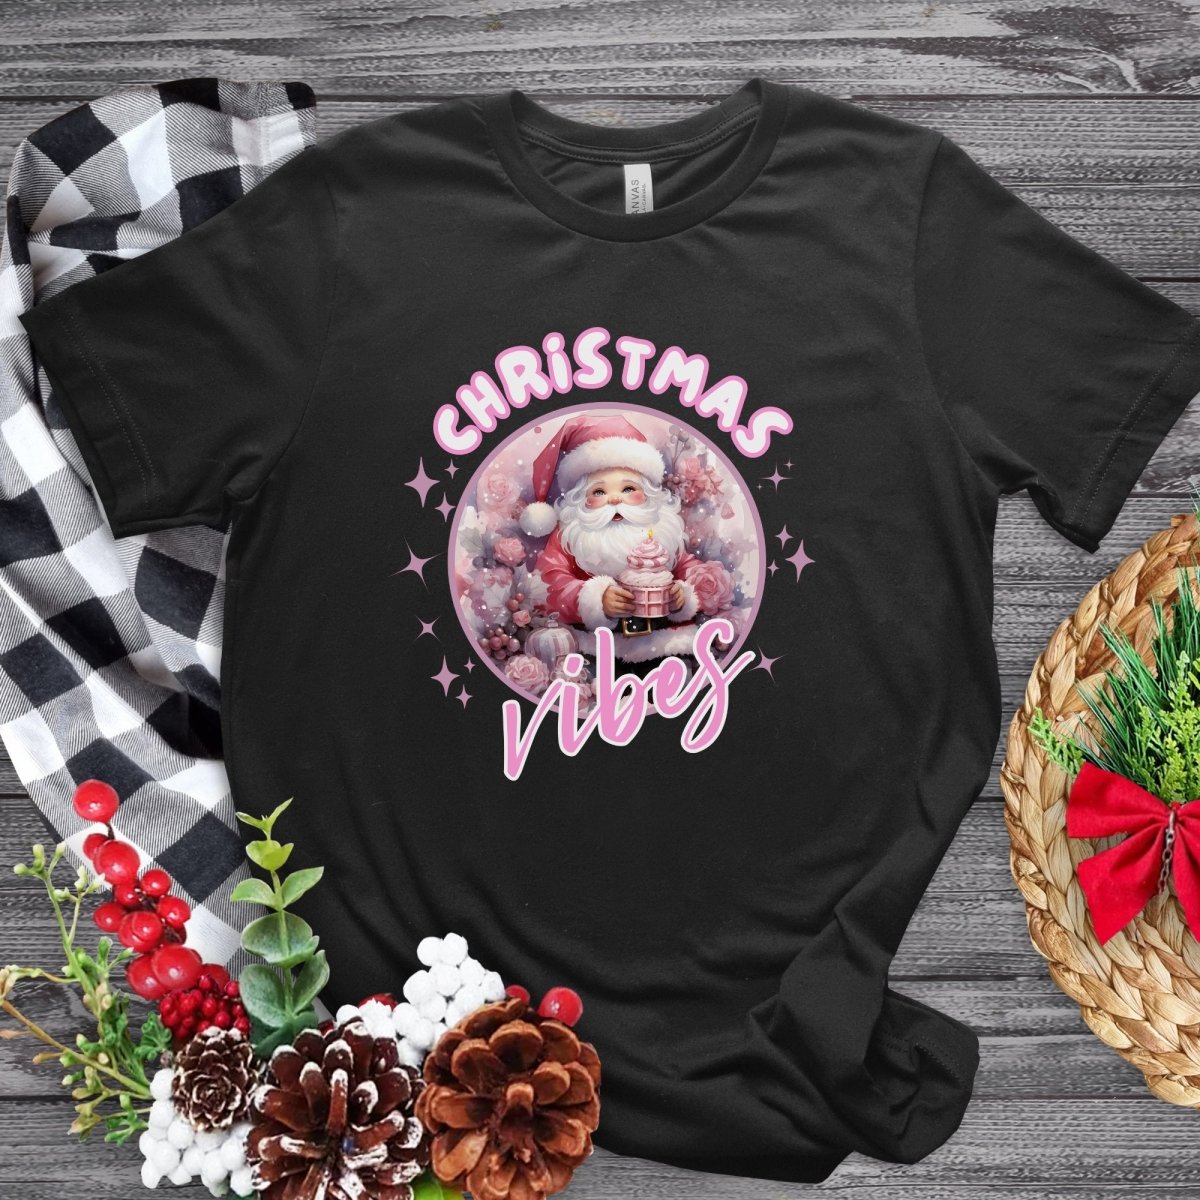 Christmas Vibes Santa T-Shirt - High Quality Funny Unisex T-Shirt, Pink Holiday Shirt Design, Christmas Vacation Tee, Cute Pink Santa Shirt - Everything Pixel